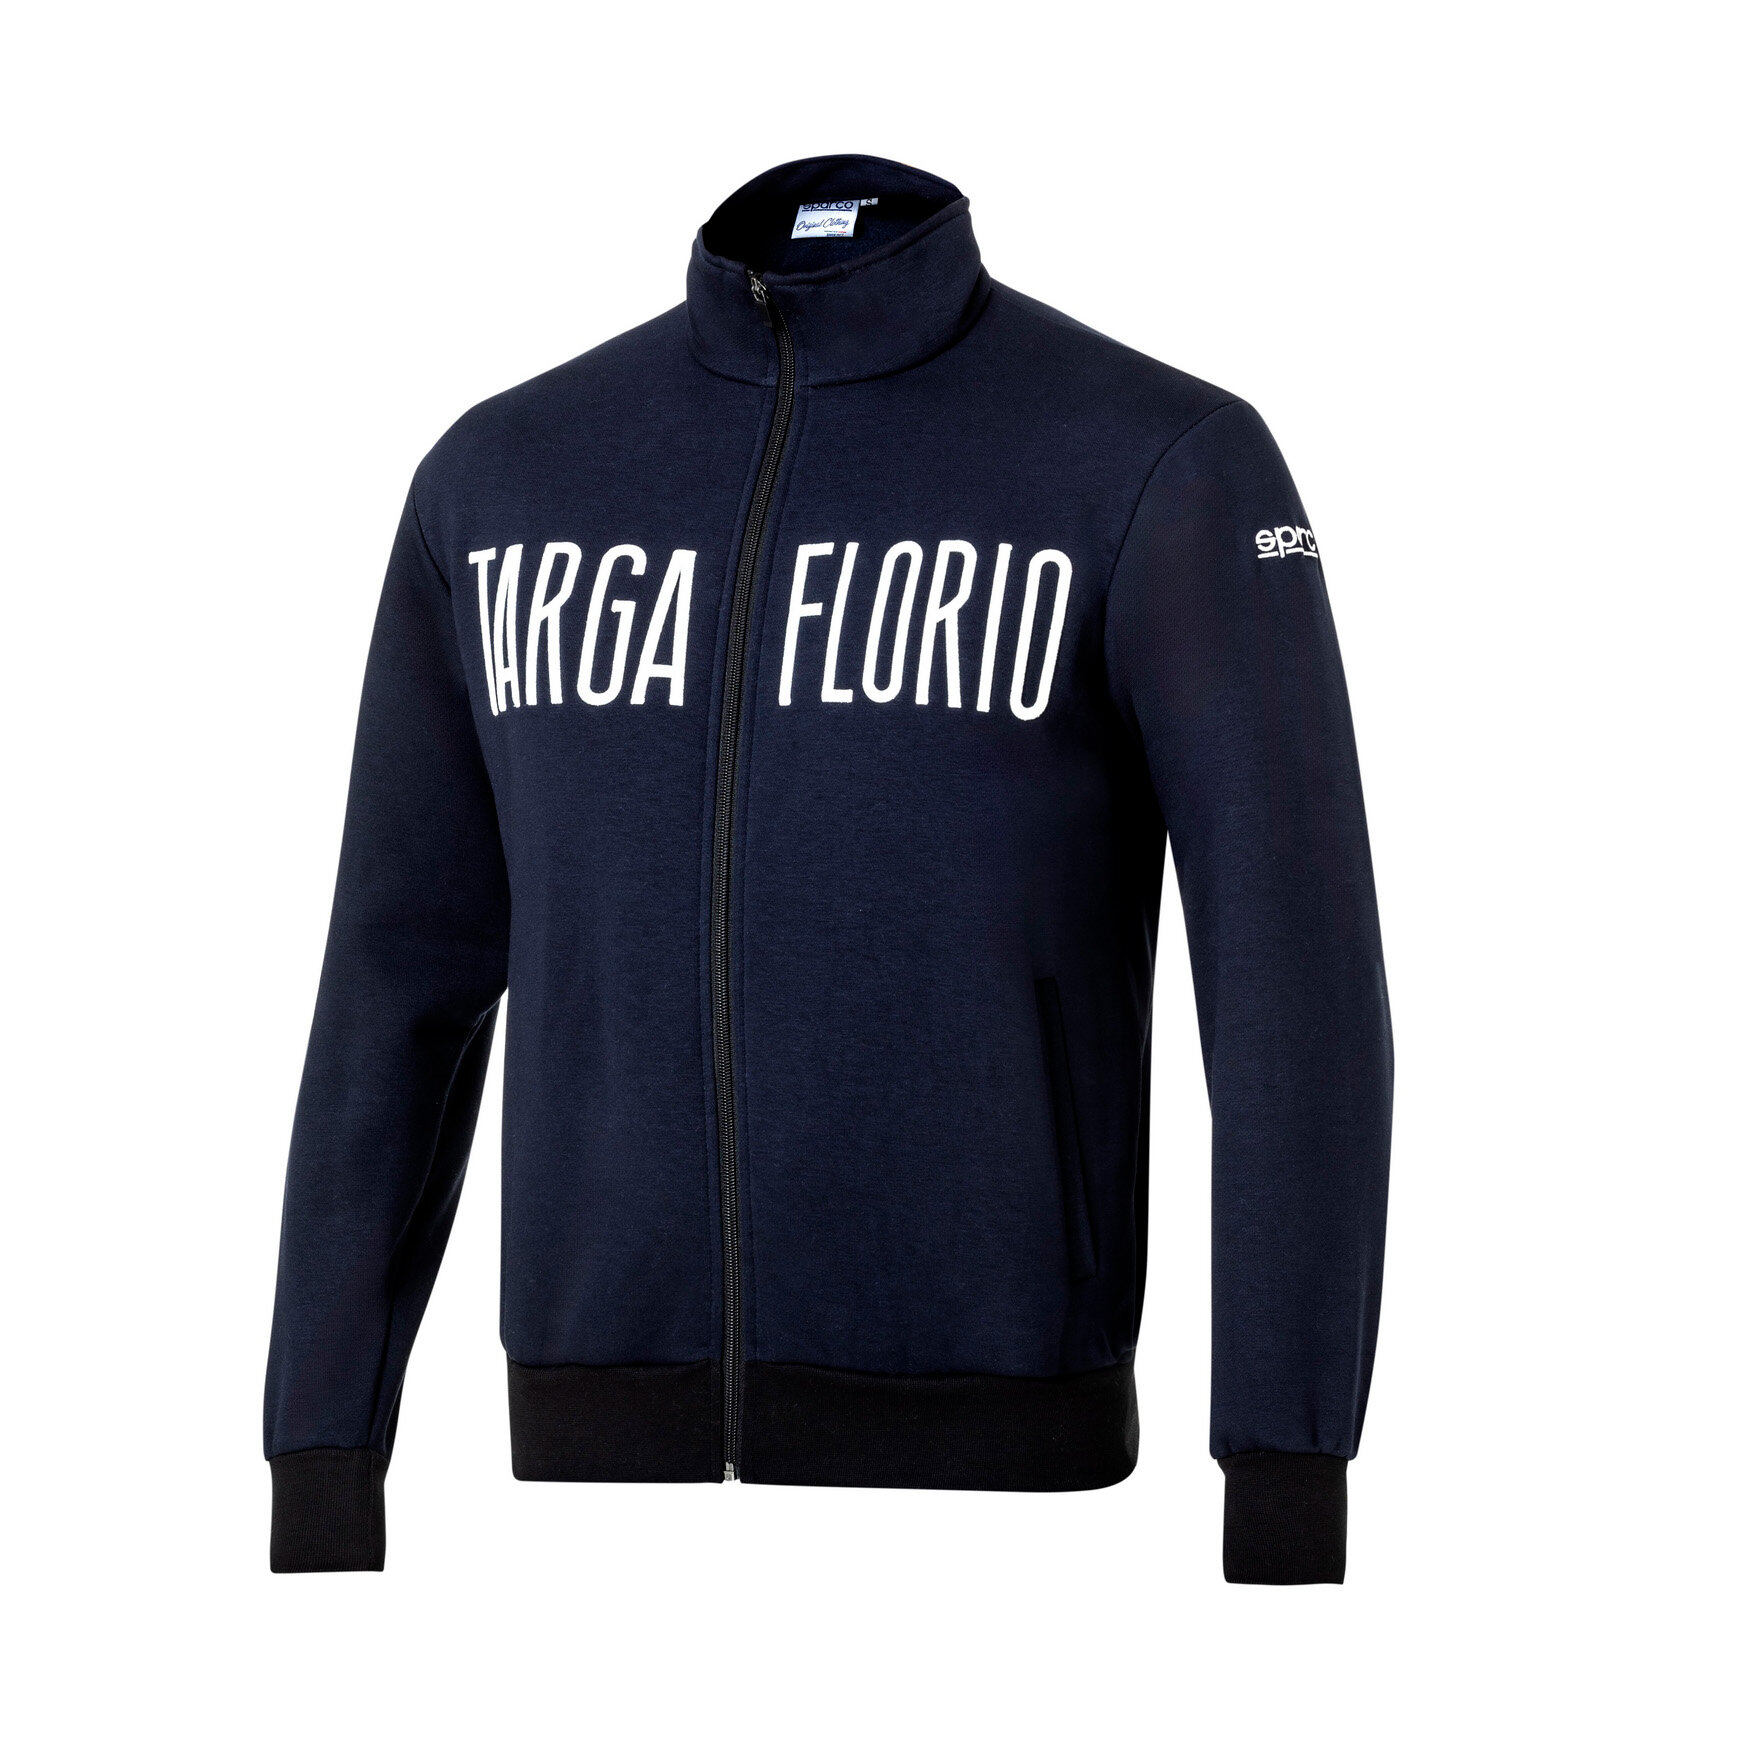 Sweatshirt Targa Florio Blå